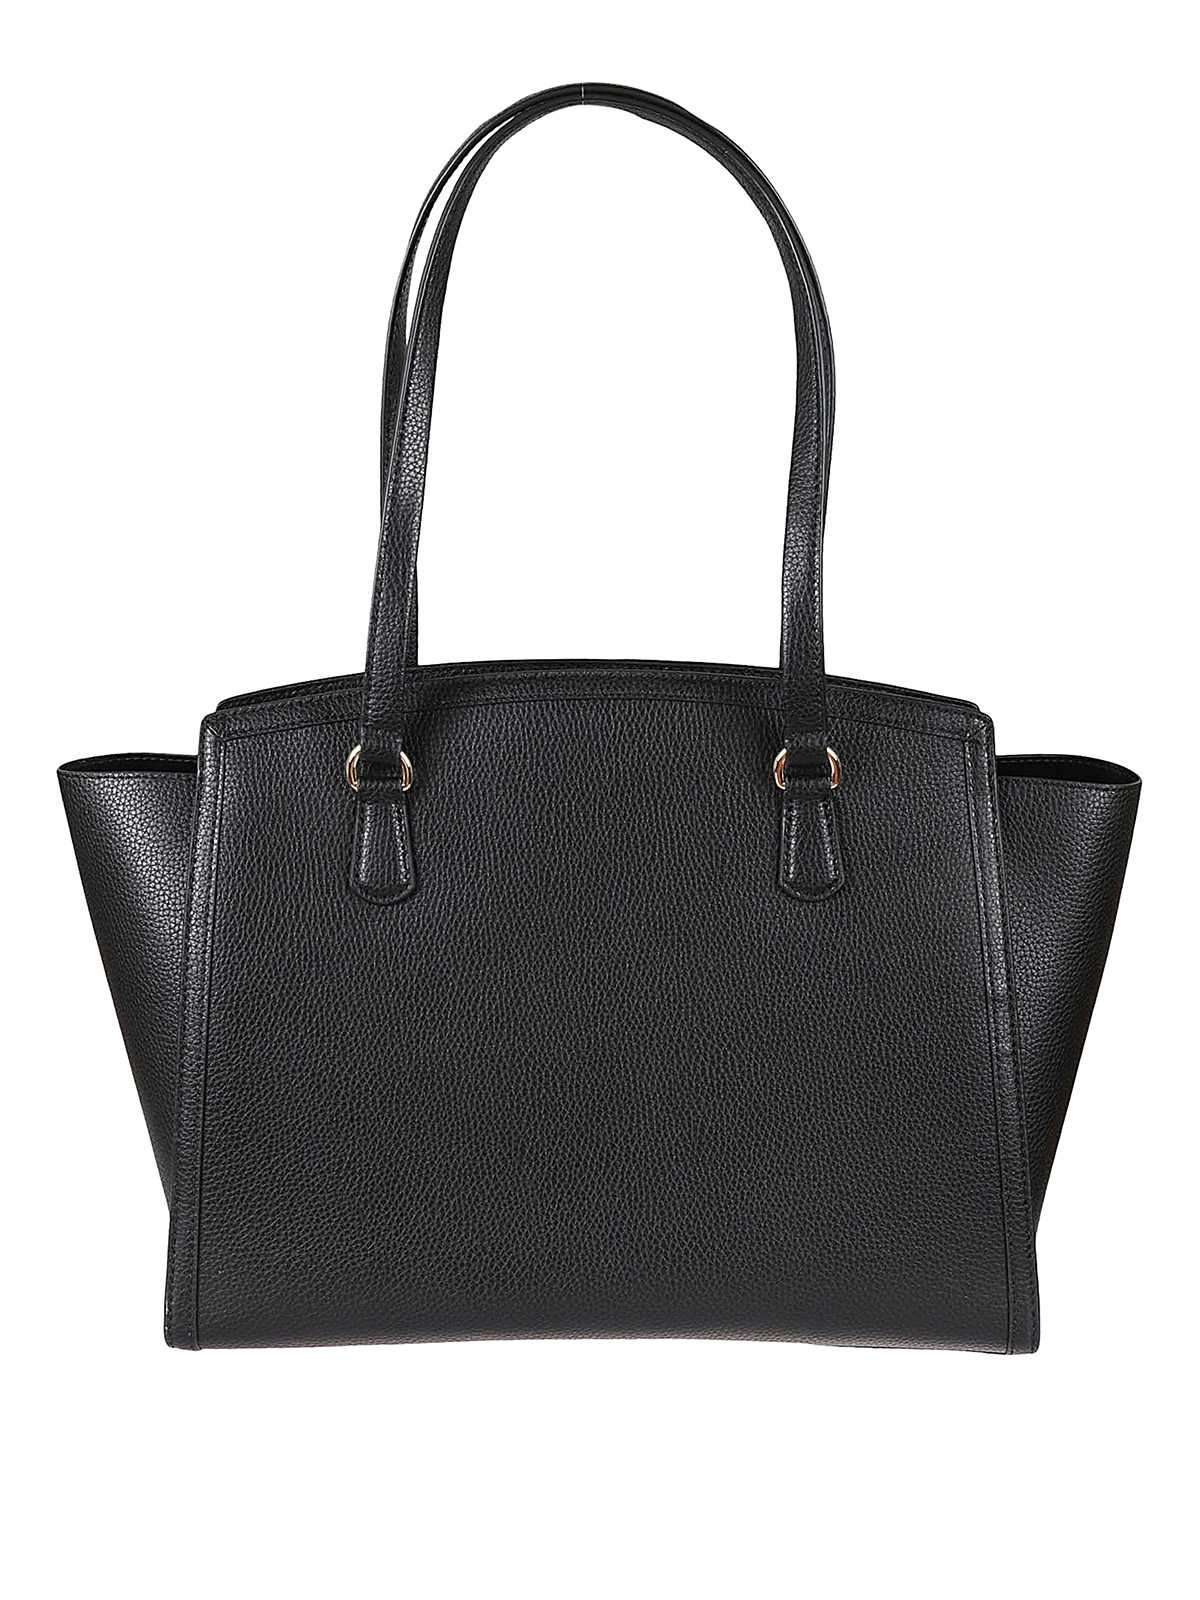 Calvin Klein Saffiano Leather Small Winged Tote Bag in Black